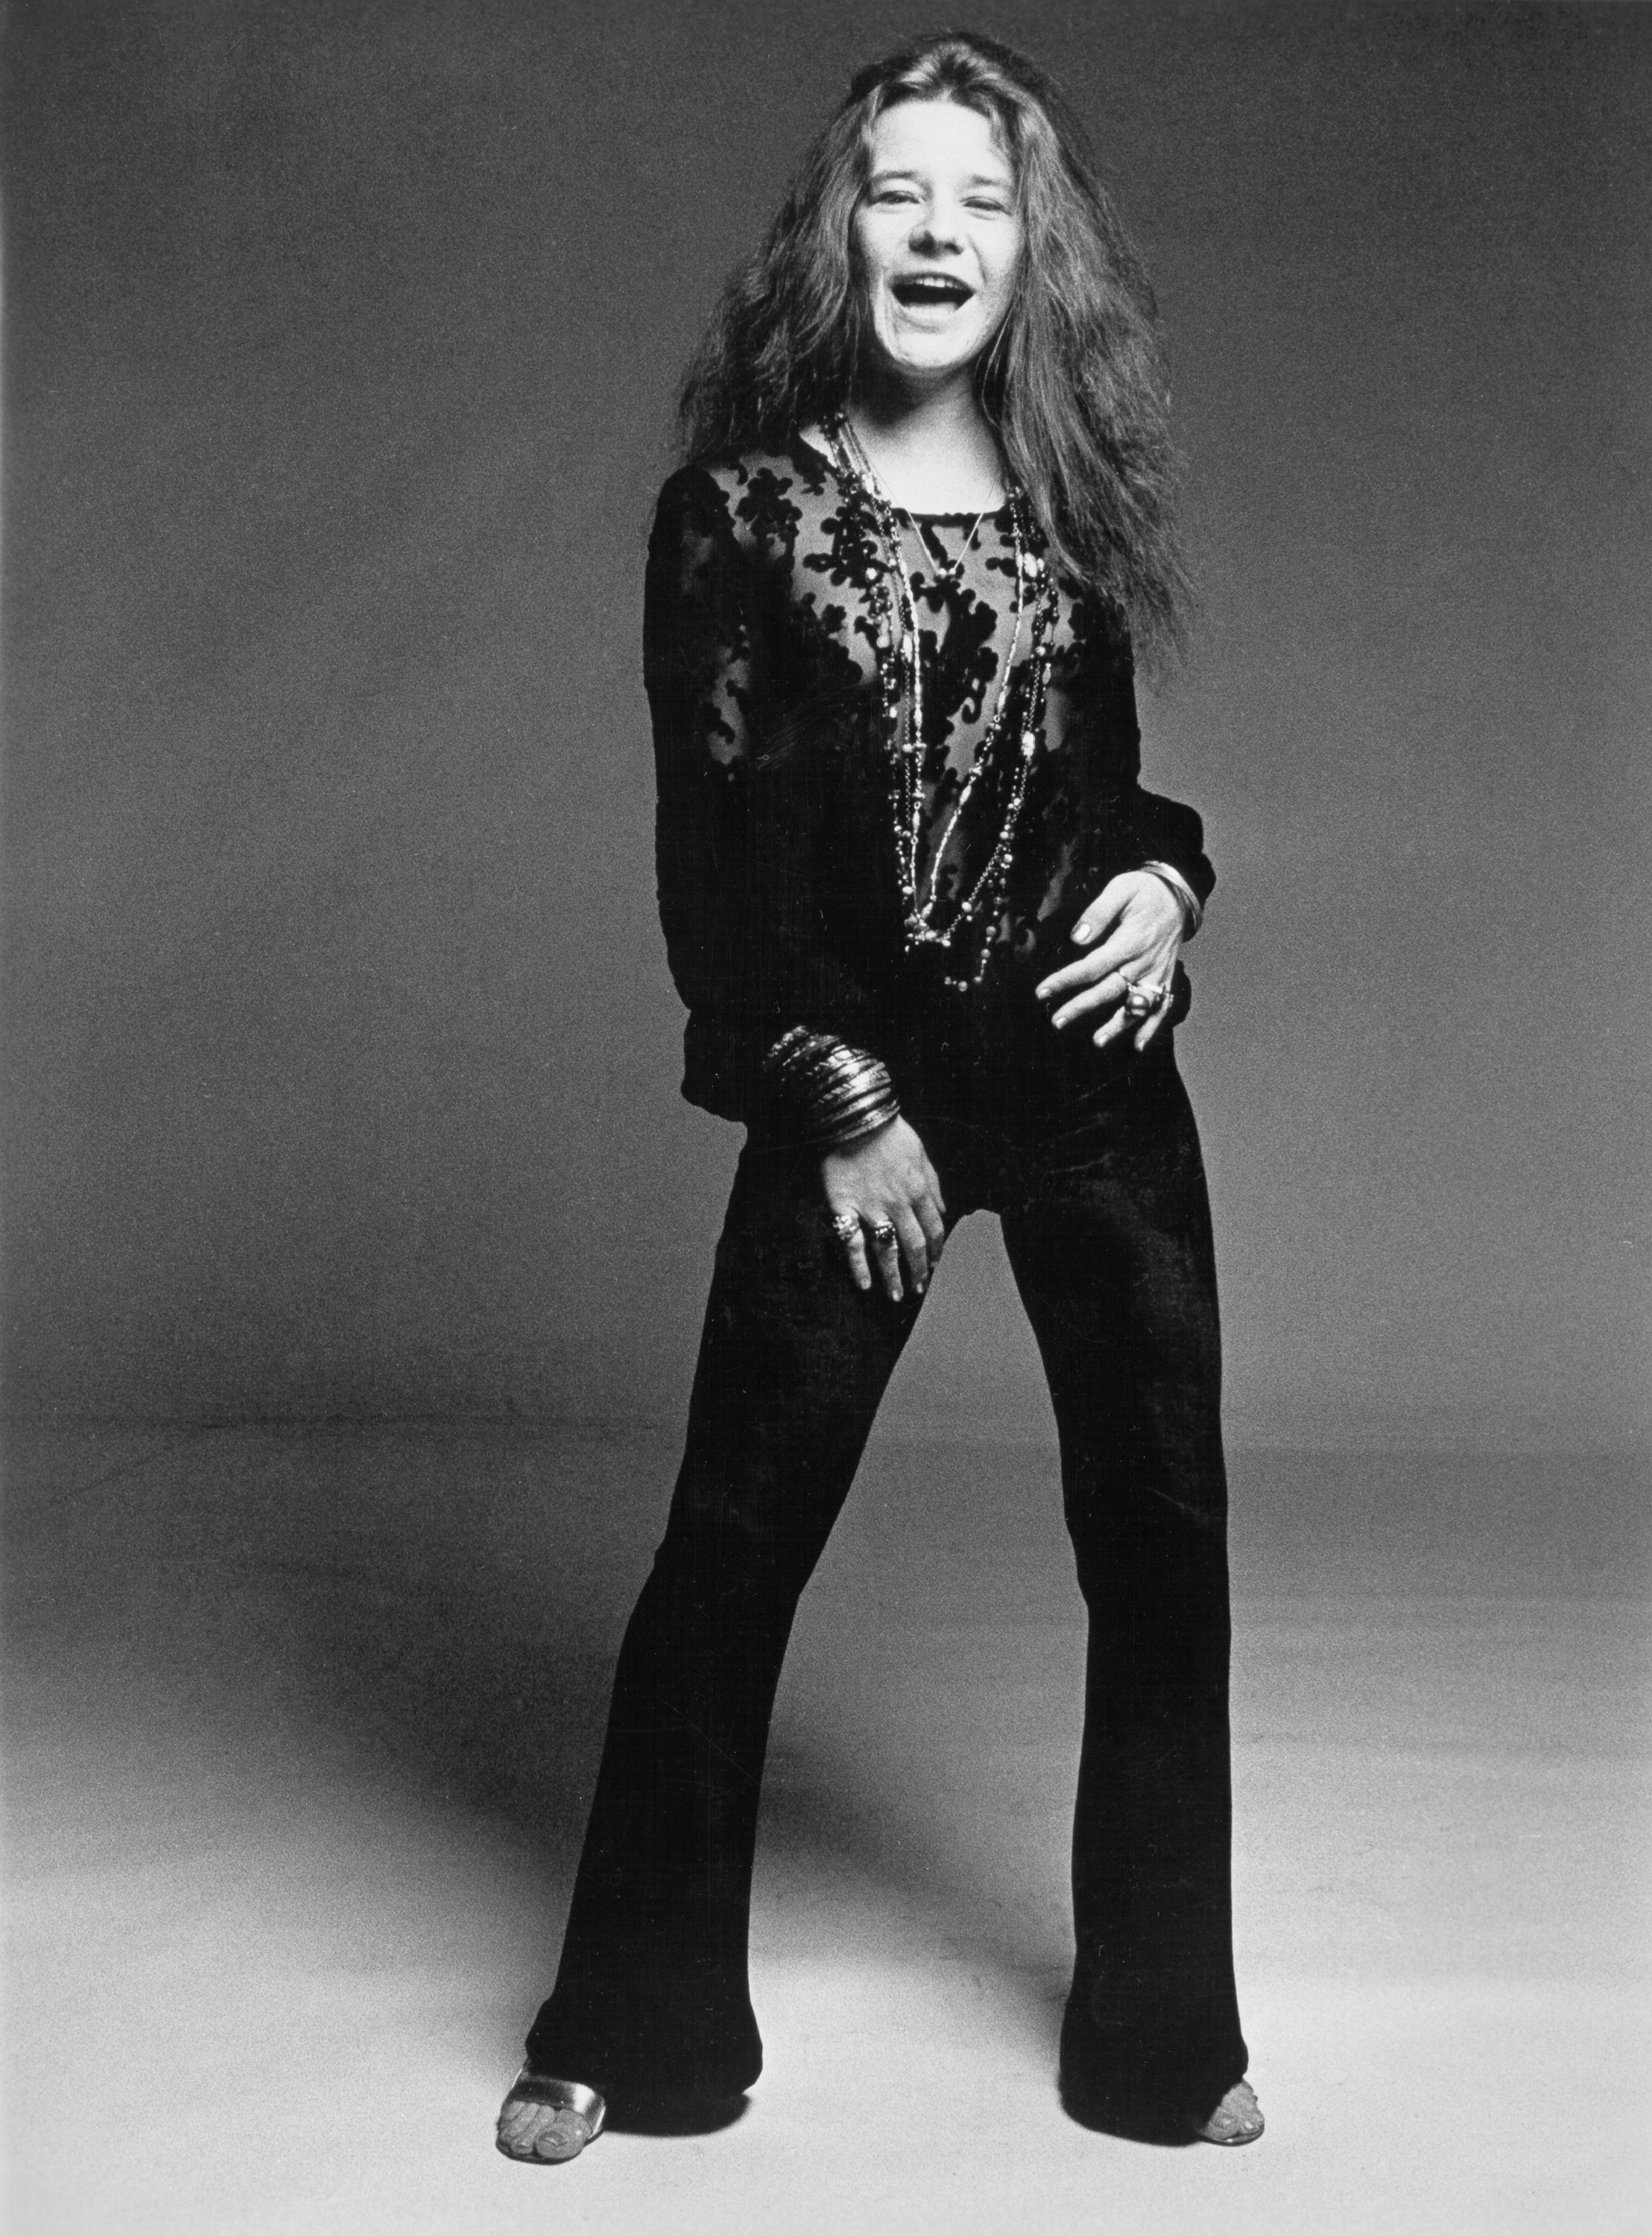 UNSPECIFIED - CIRCA 1970: Photo of Janis Joplin Photo by Michael Ochs Archi...